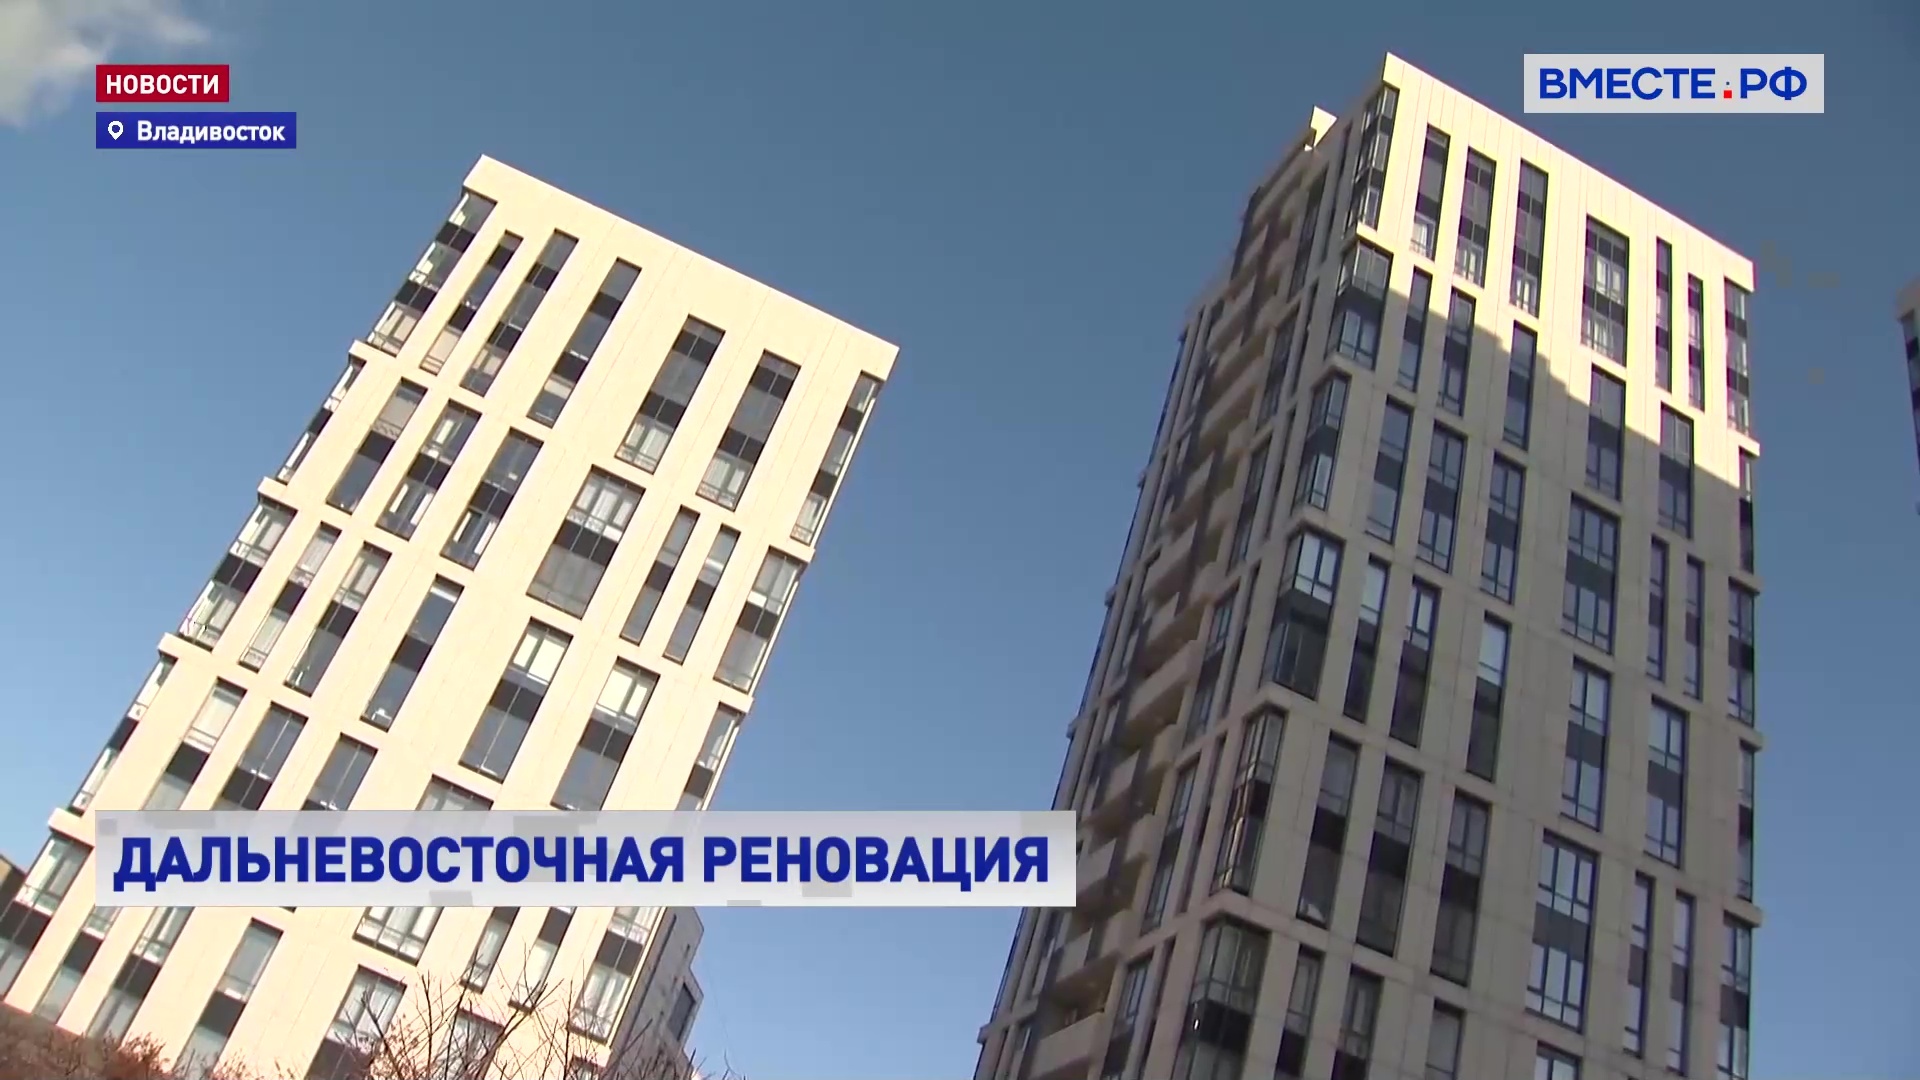 РЕПОРТАЖ: Владивосток накроет волна реновации